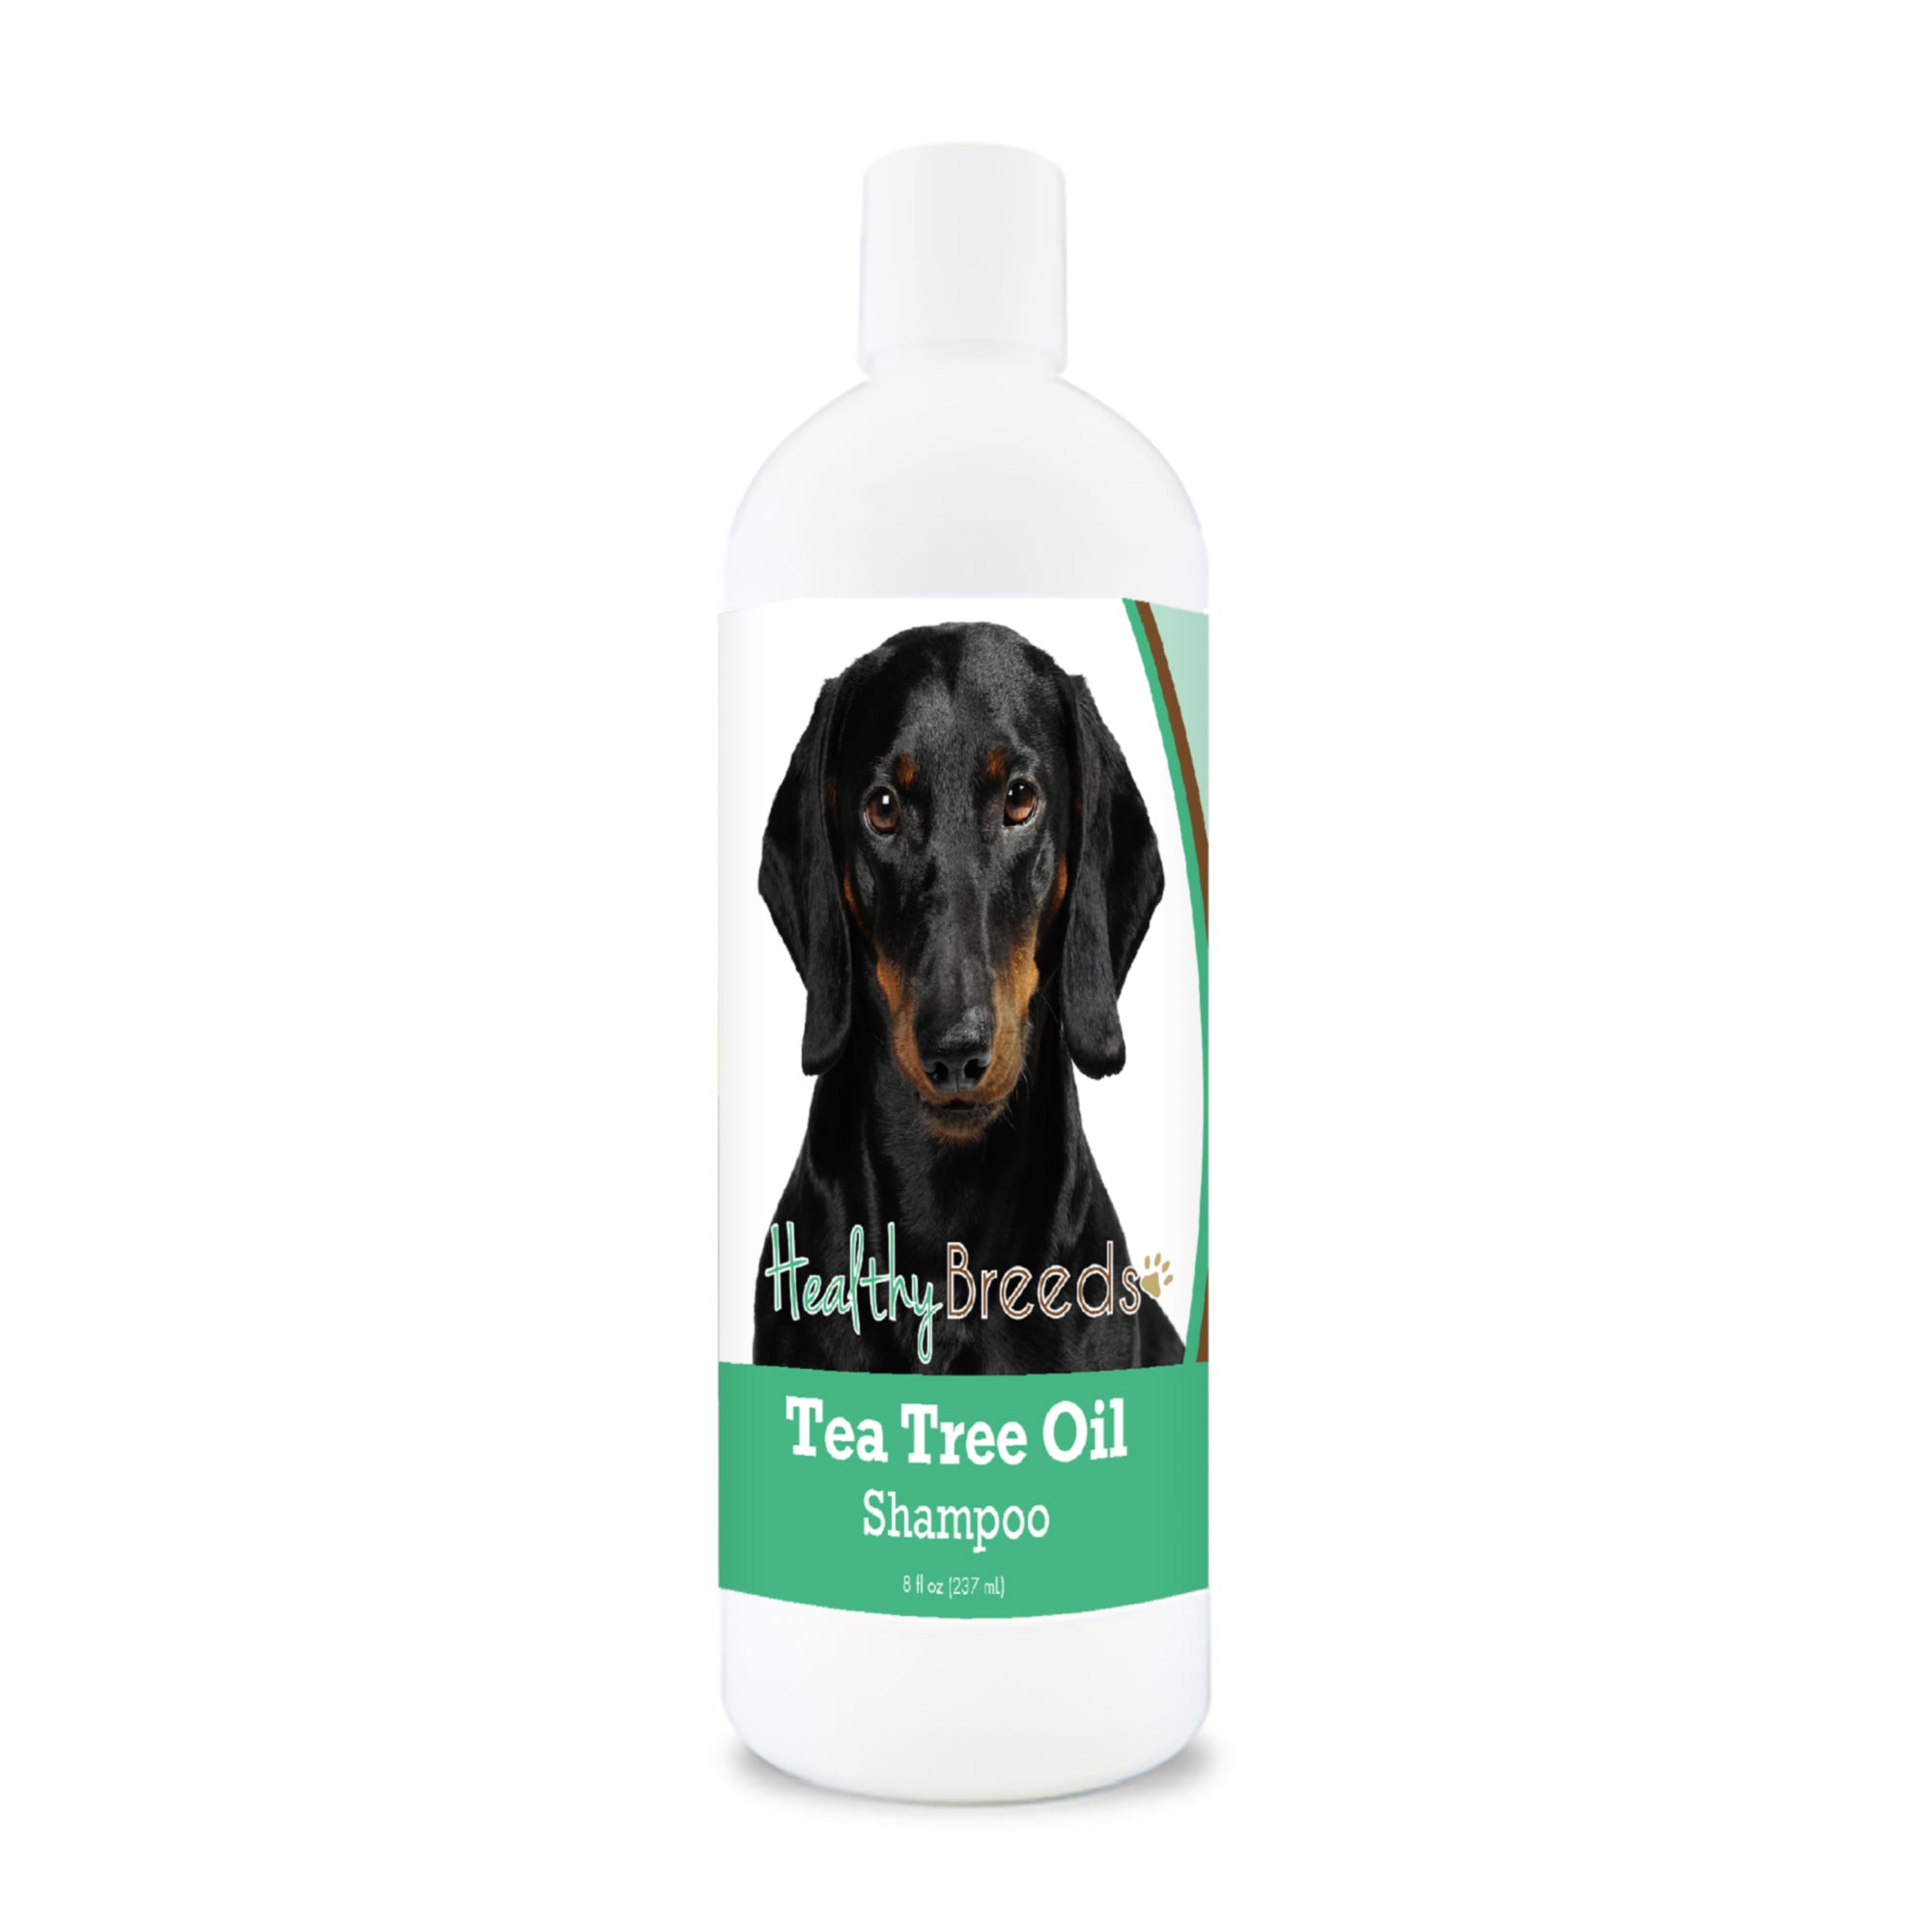 Dachshund Tea Tree Oil Shampoo 8 oz